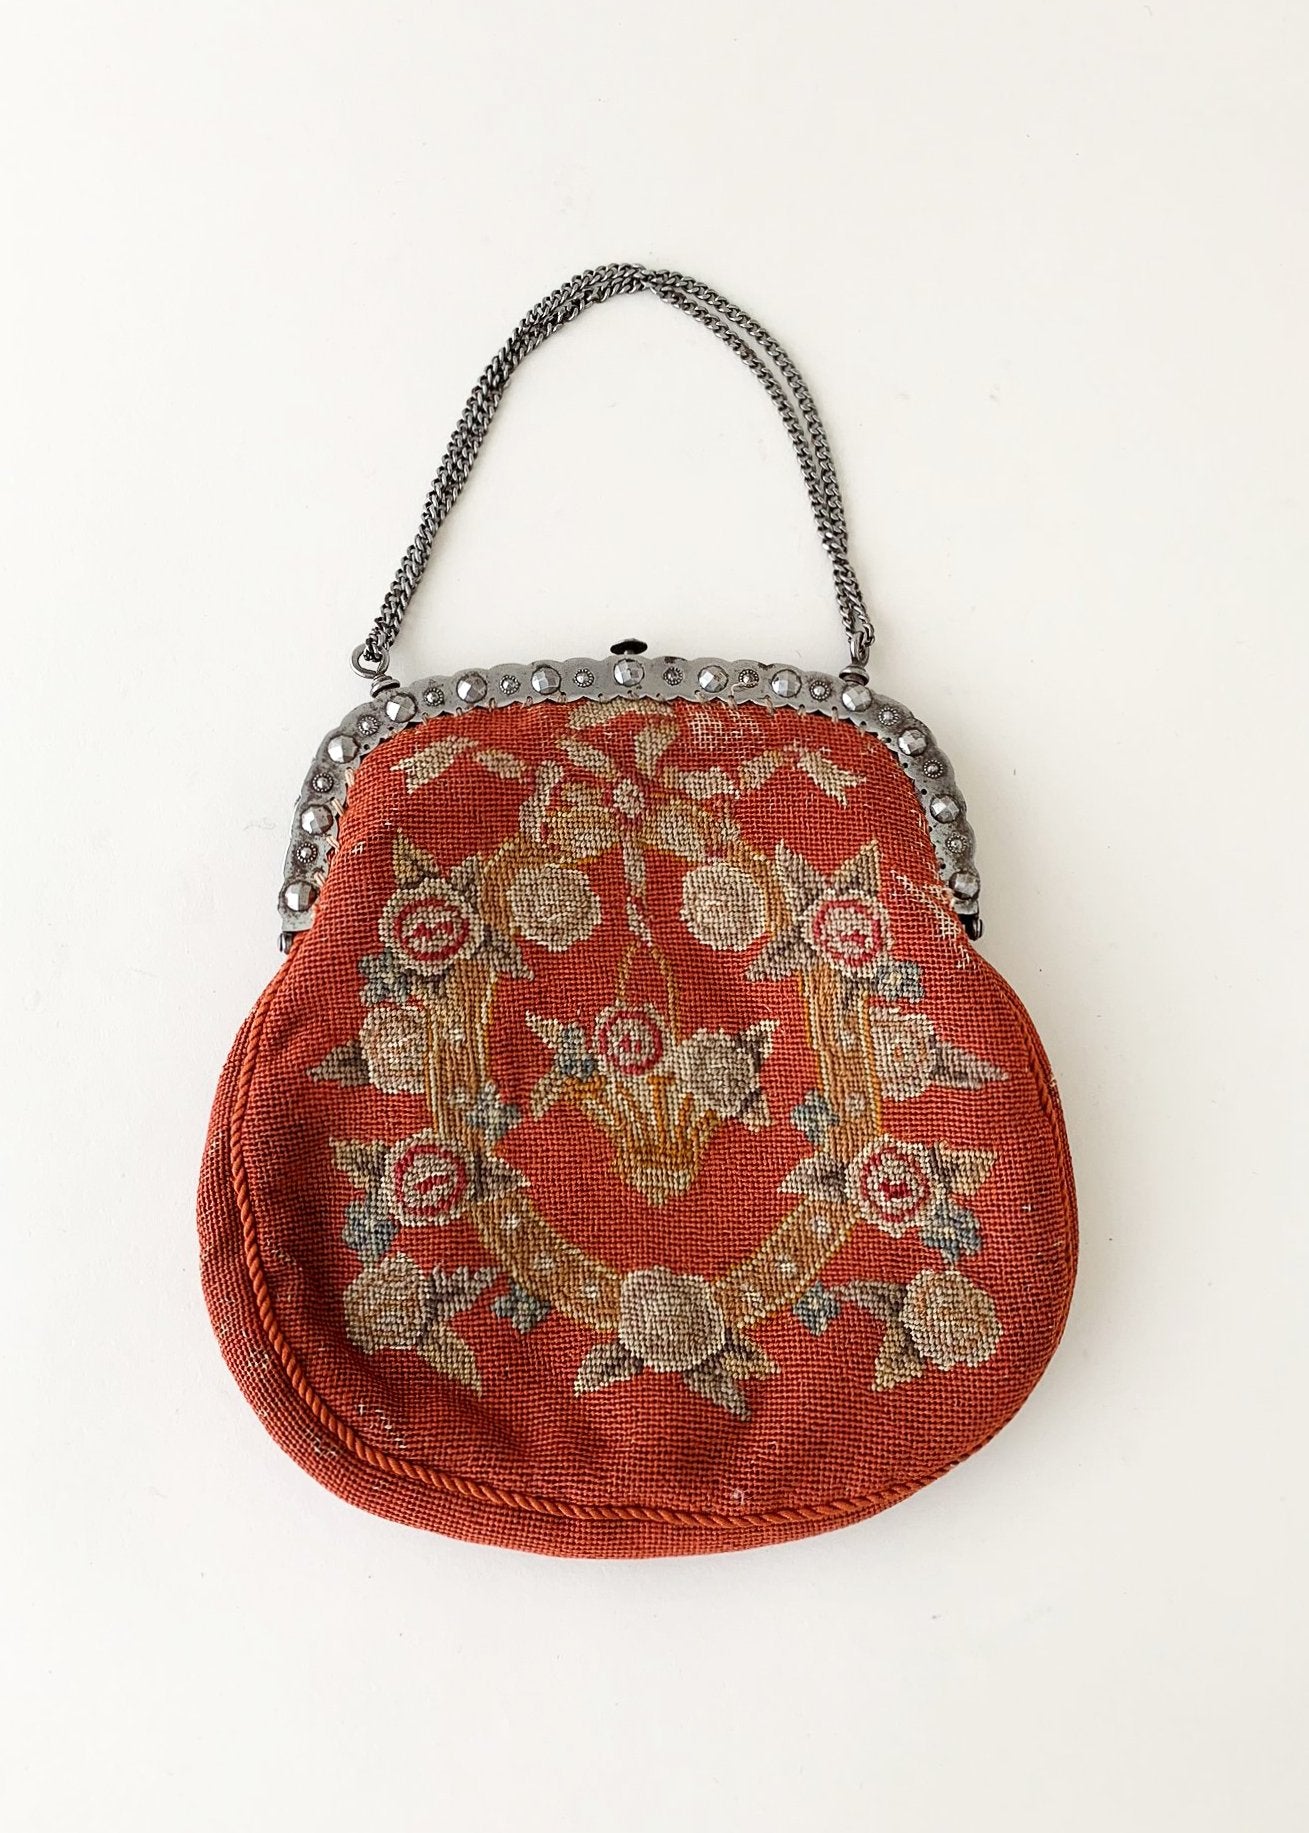 1920s Handbags, Purses, and Shopping Bag Styles